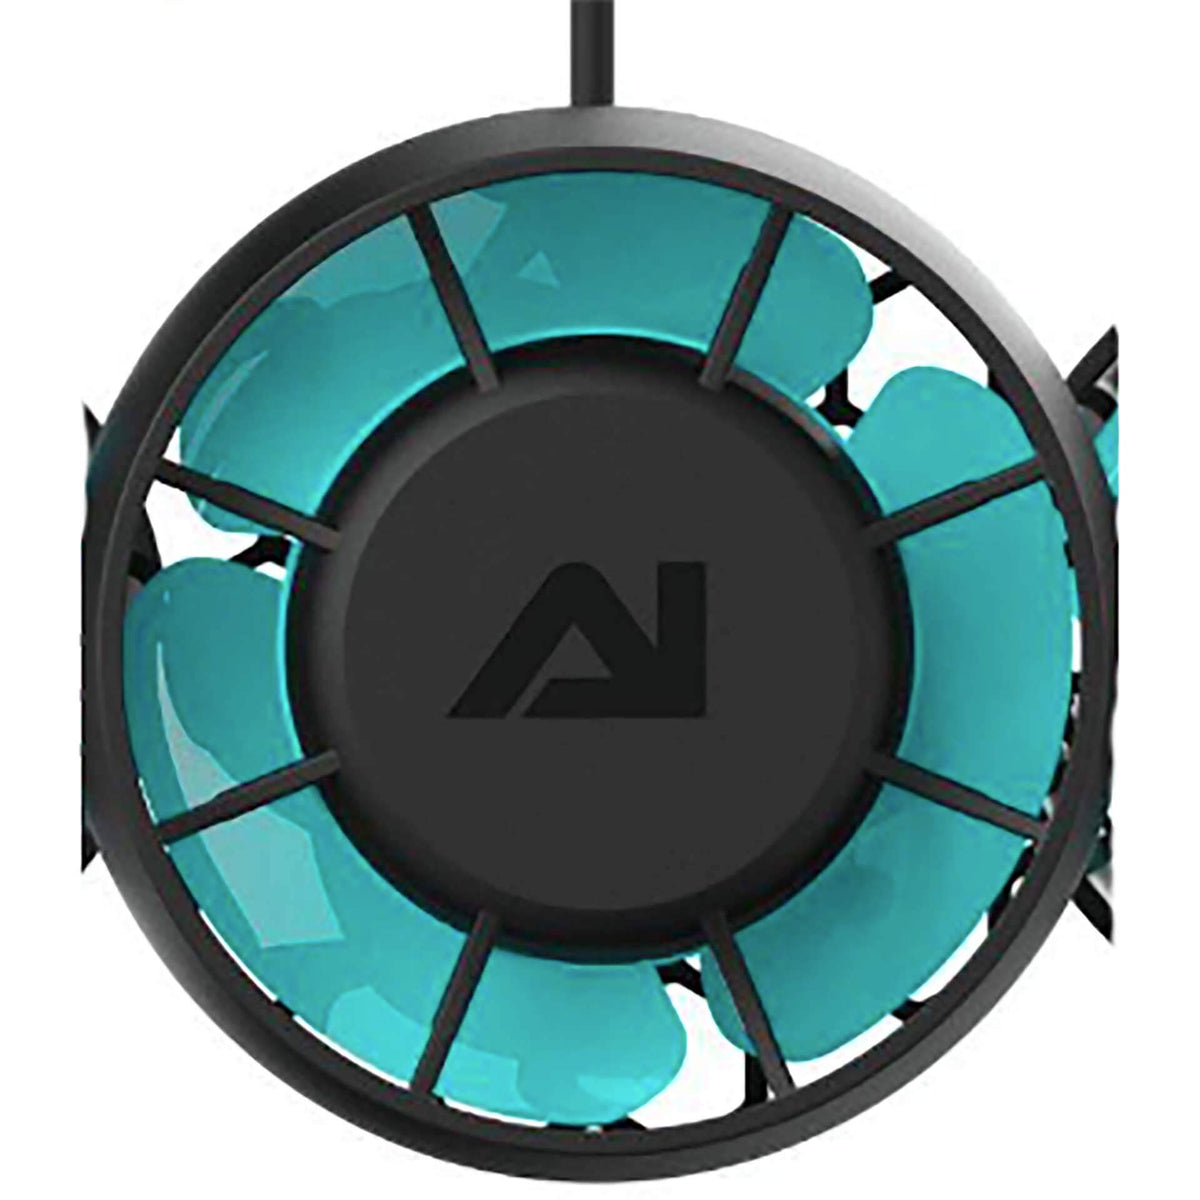 AI Nero 7 submersible pump 15,142lph by Aqua Illumination